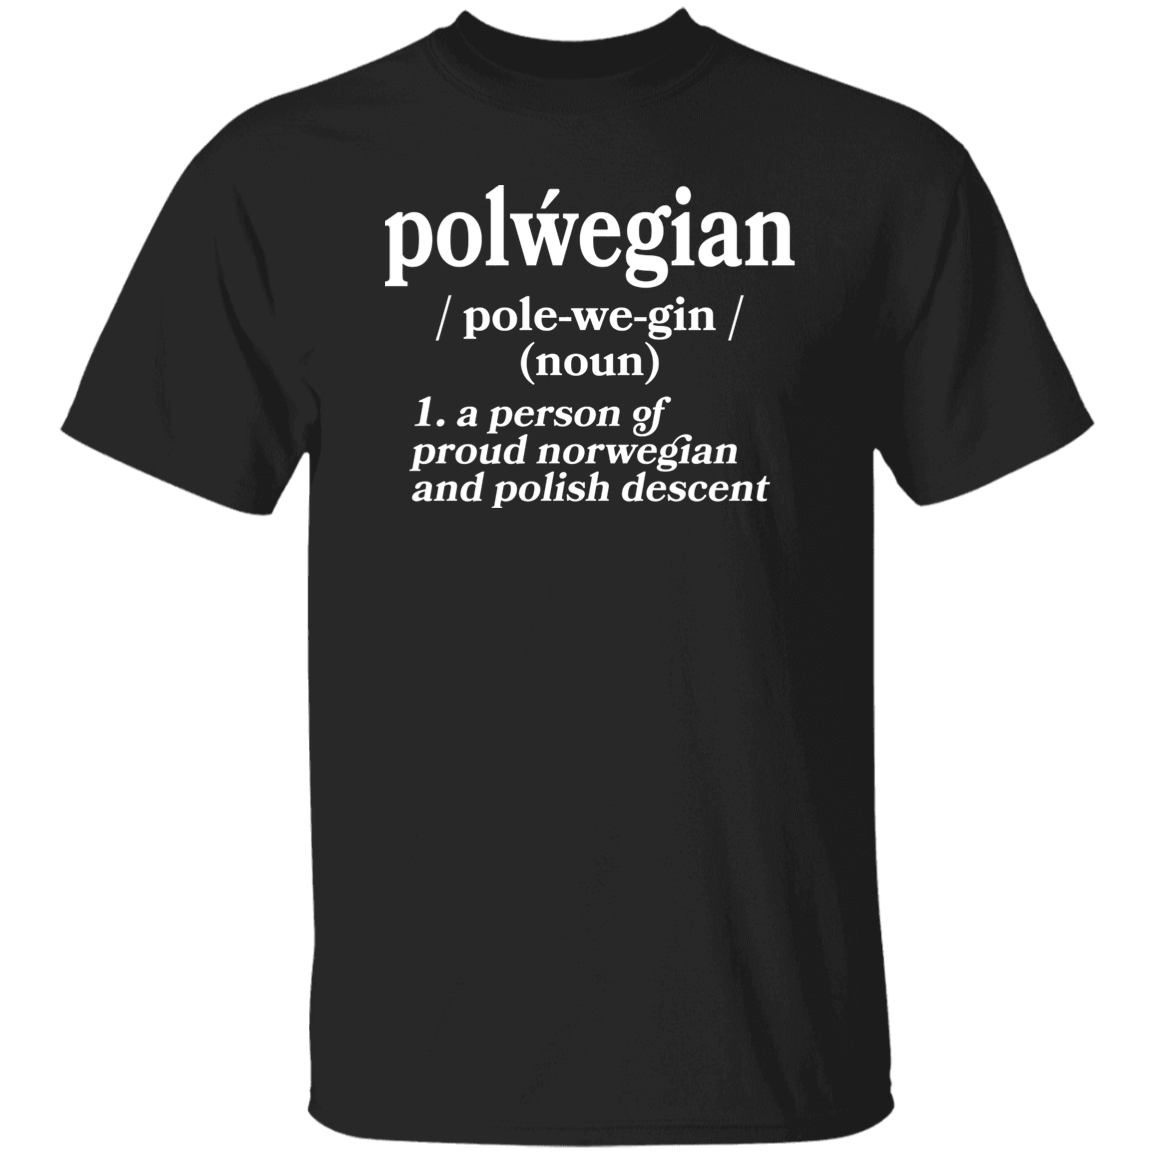 Polwegian - Norwegian and Polish Descent Apparel CustomCat G500 5.3 oz. T-Shirt Black S